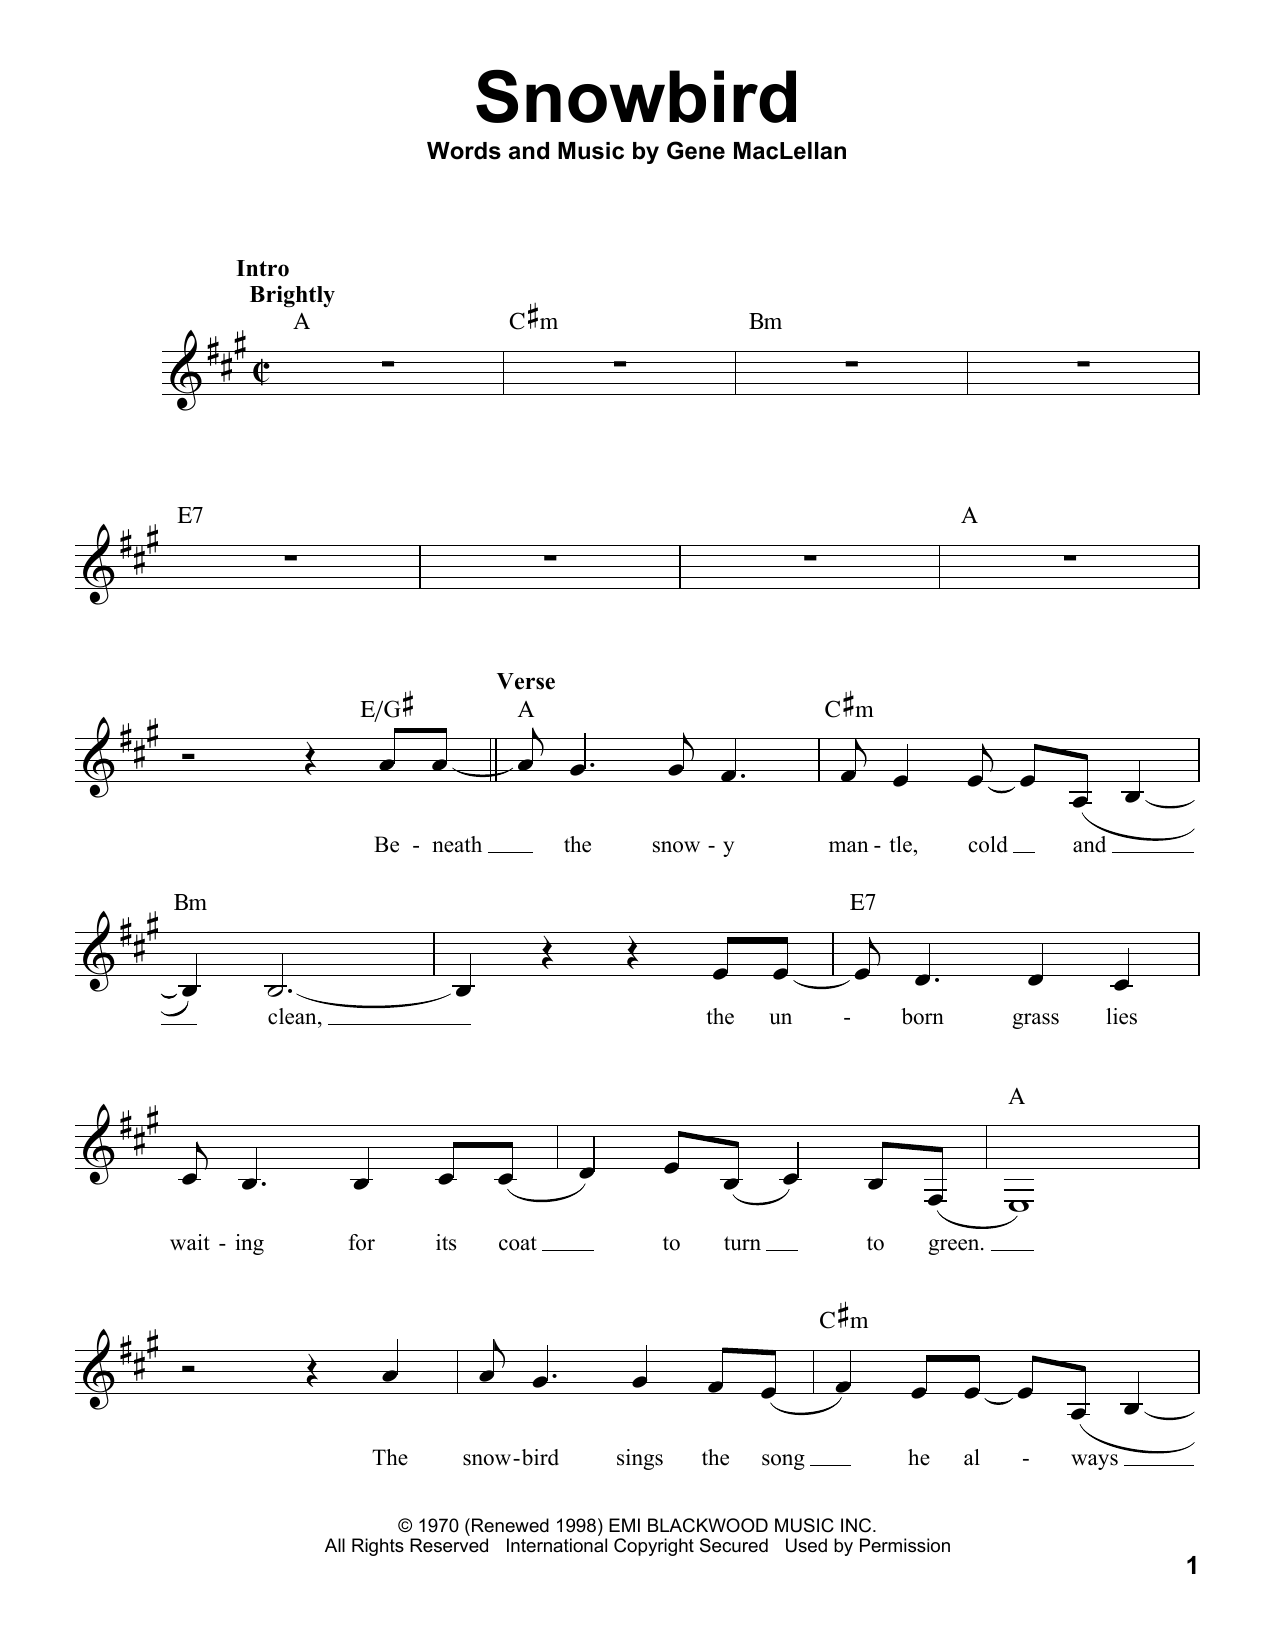 Gene MacLellan Snowbird sheet music notes and chords arranged for Lead Sheet / Fake Book